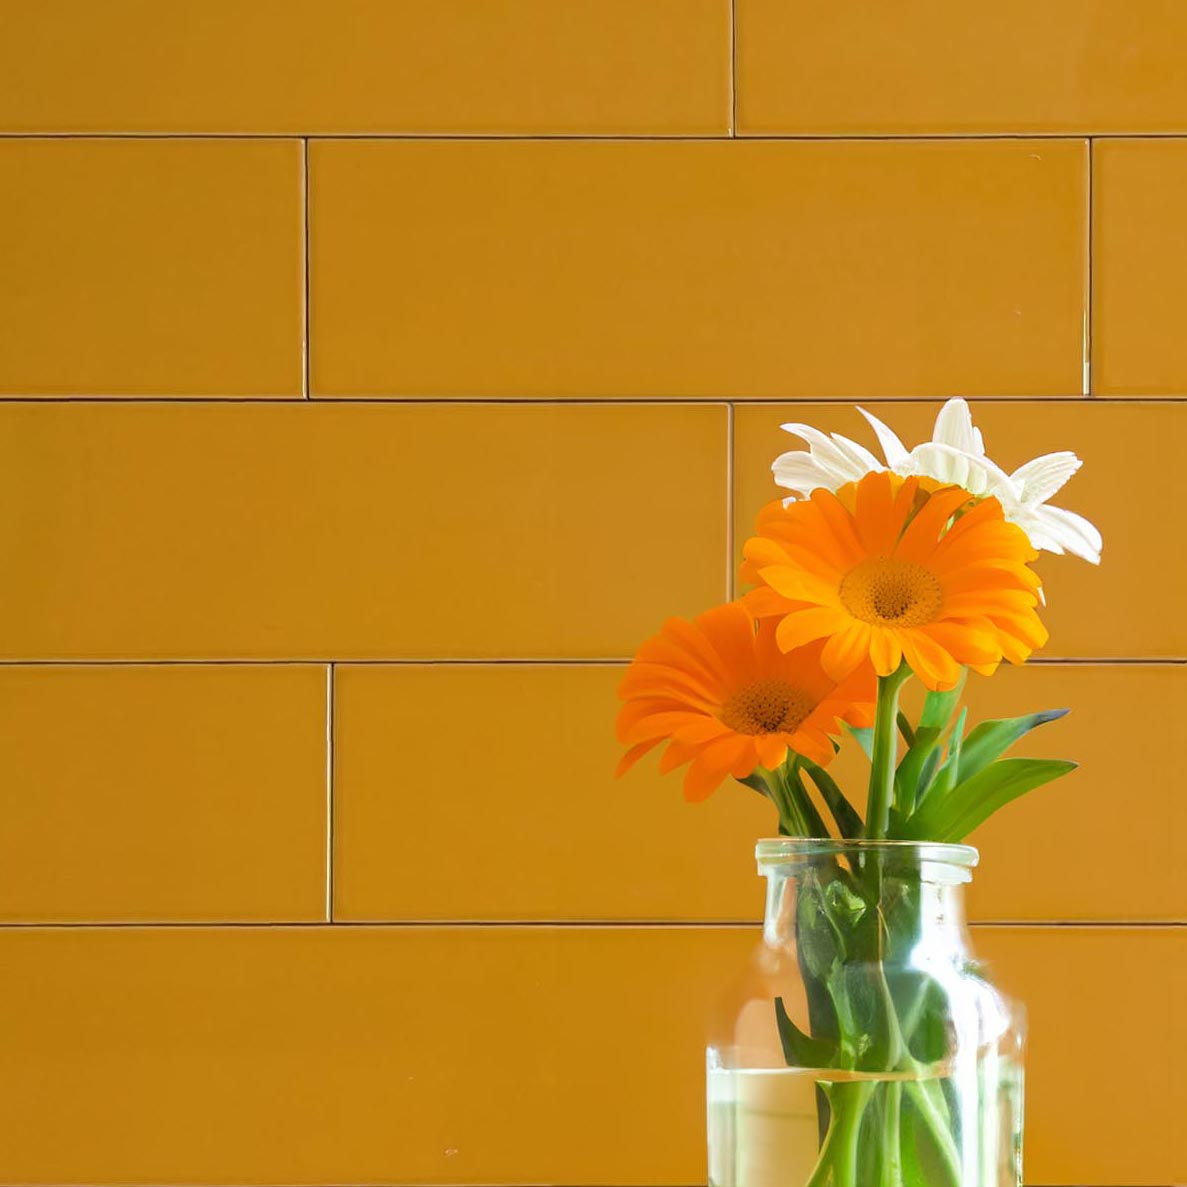 Sonic Orange Gloss Wall Tile